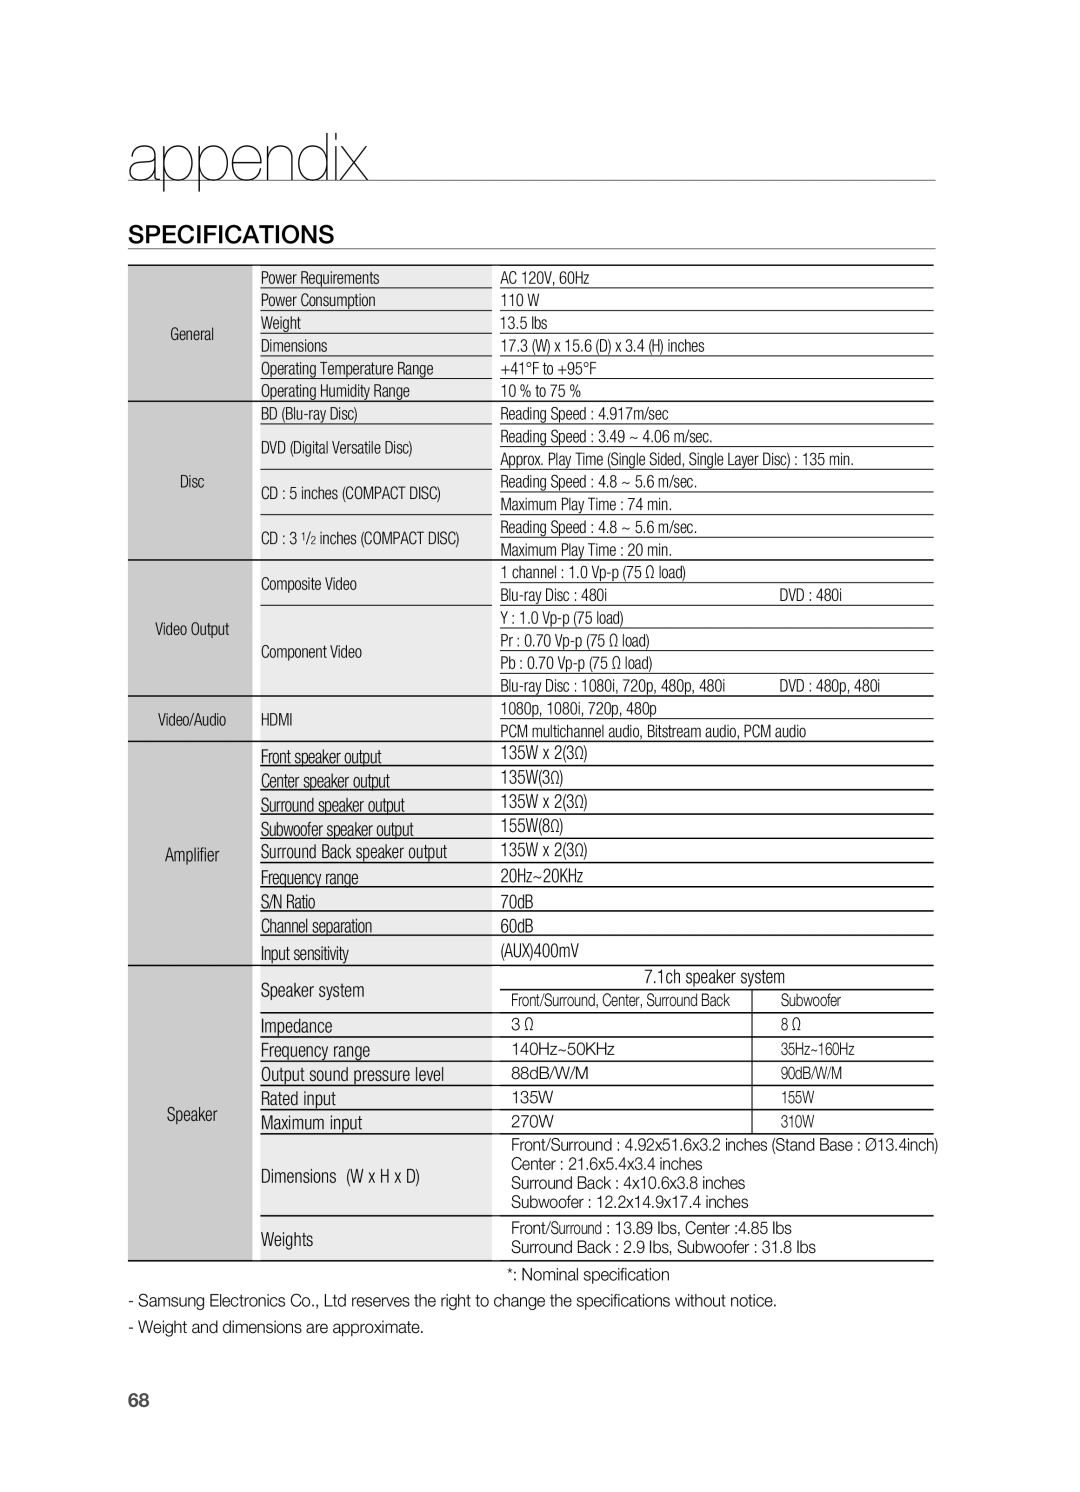 Samsung AH68-02019S manual Specifications, appendix 